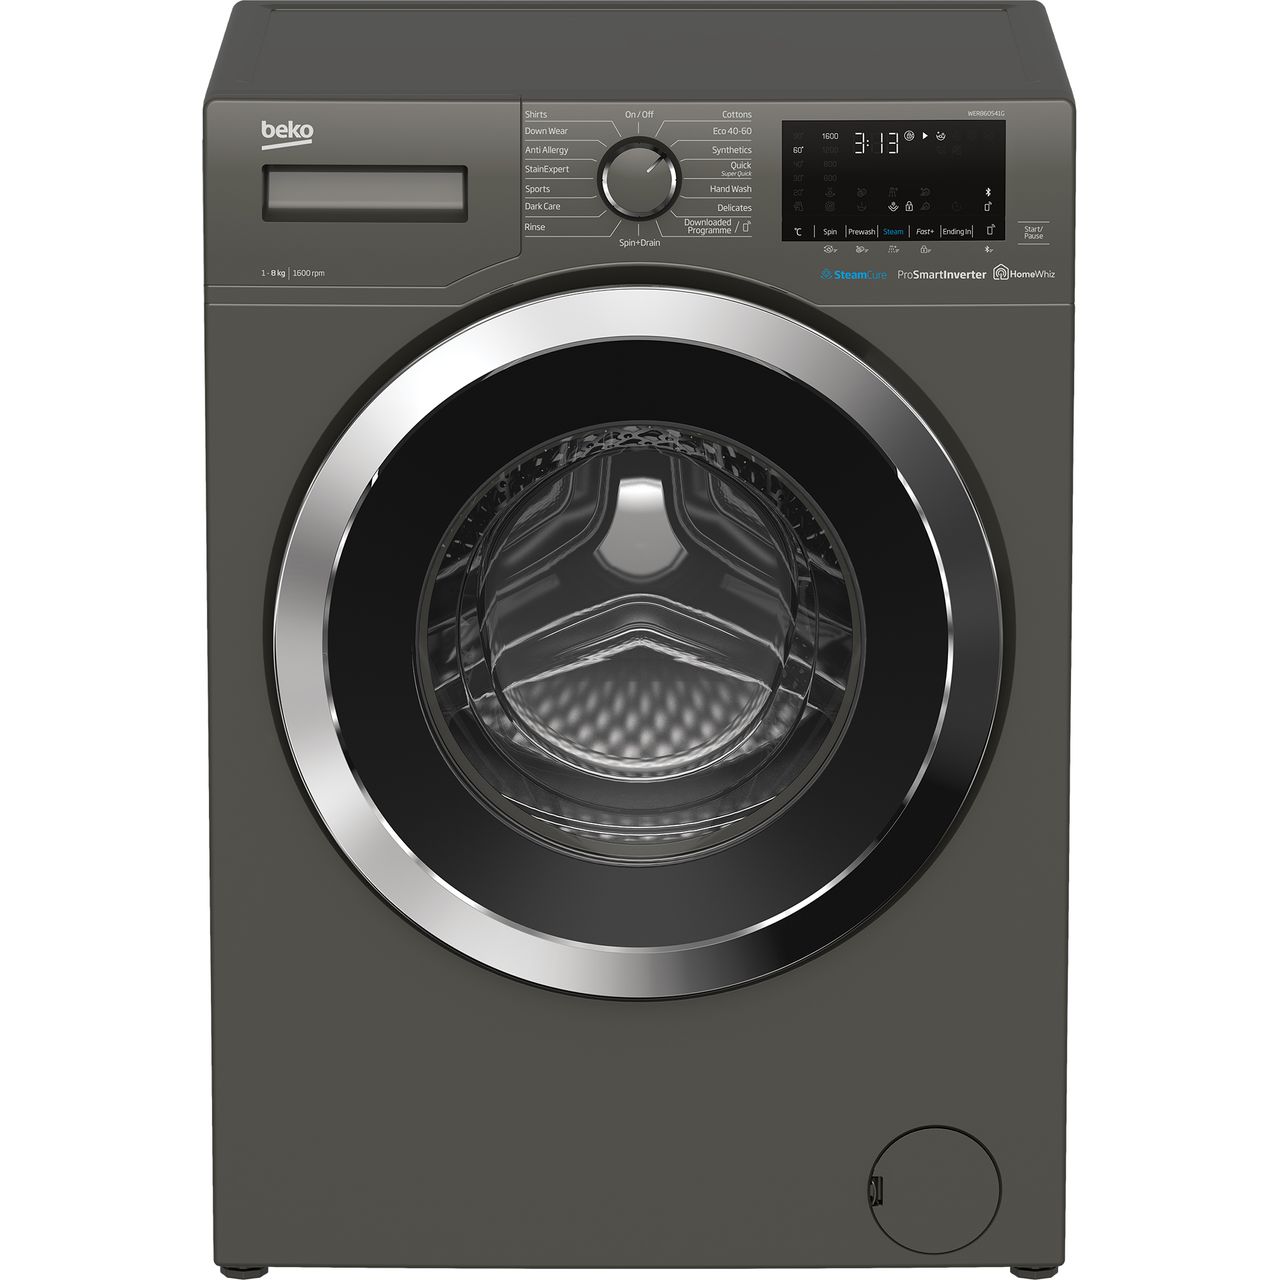 Beko WER860541G 8Kg Washing Machine with 1600 rpm Review